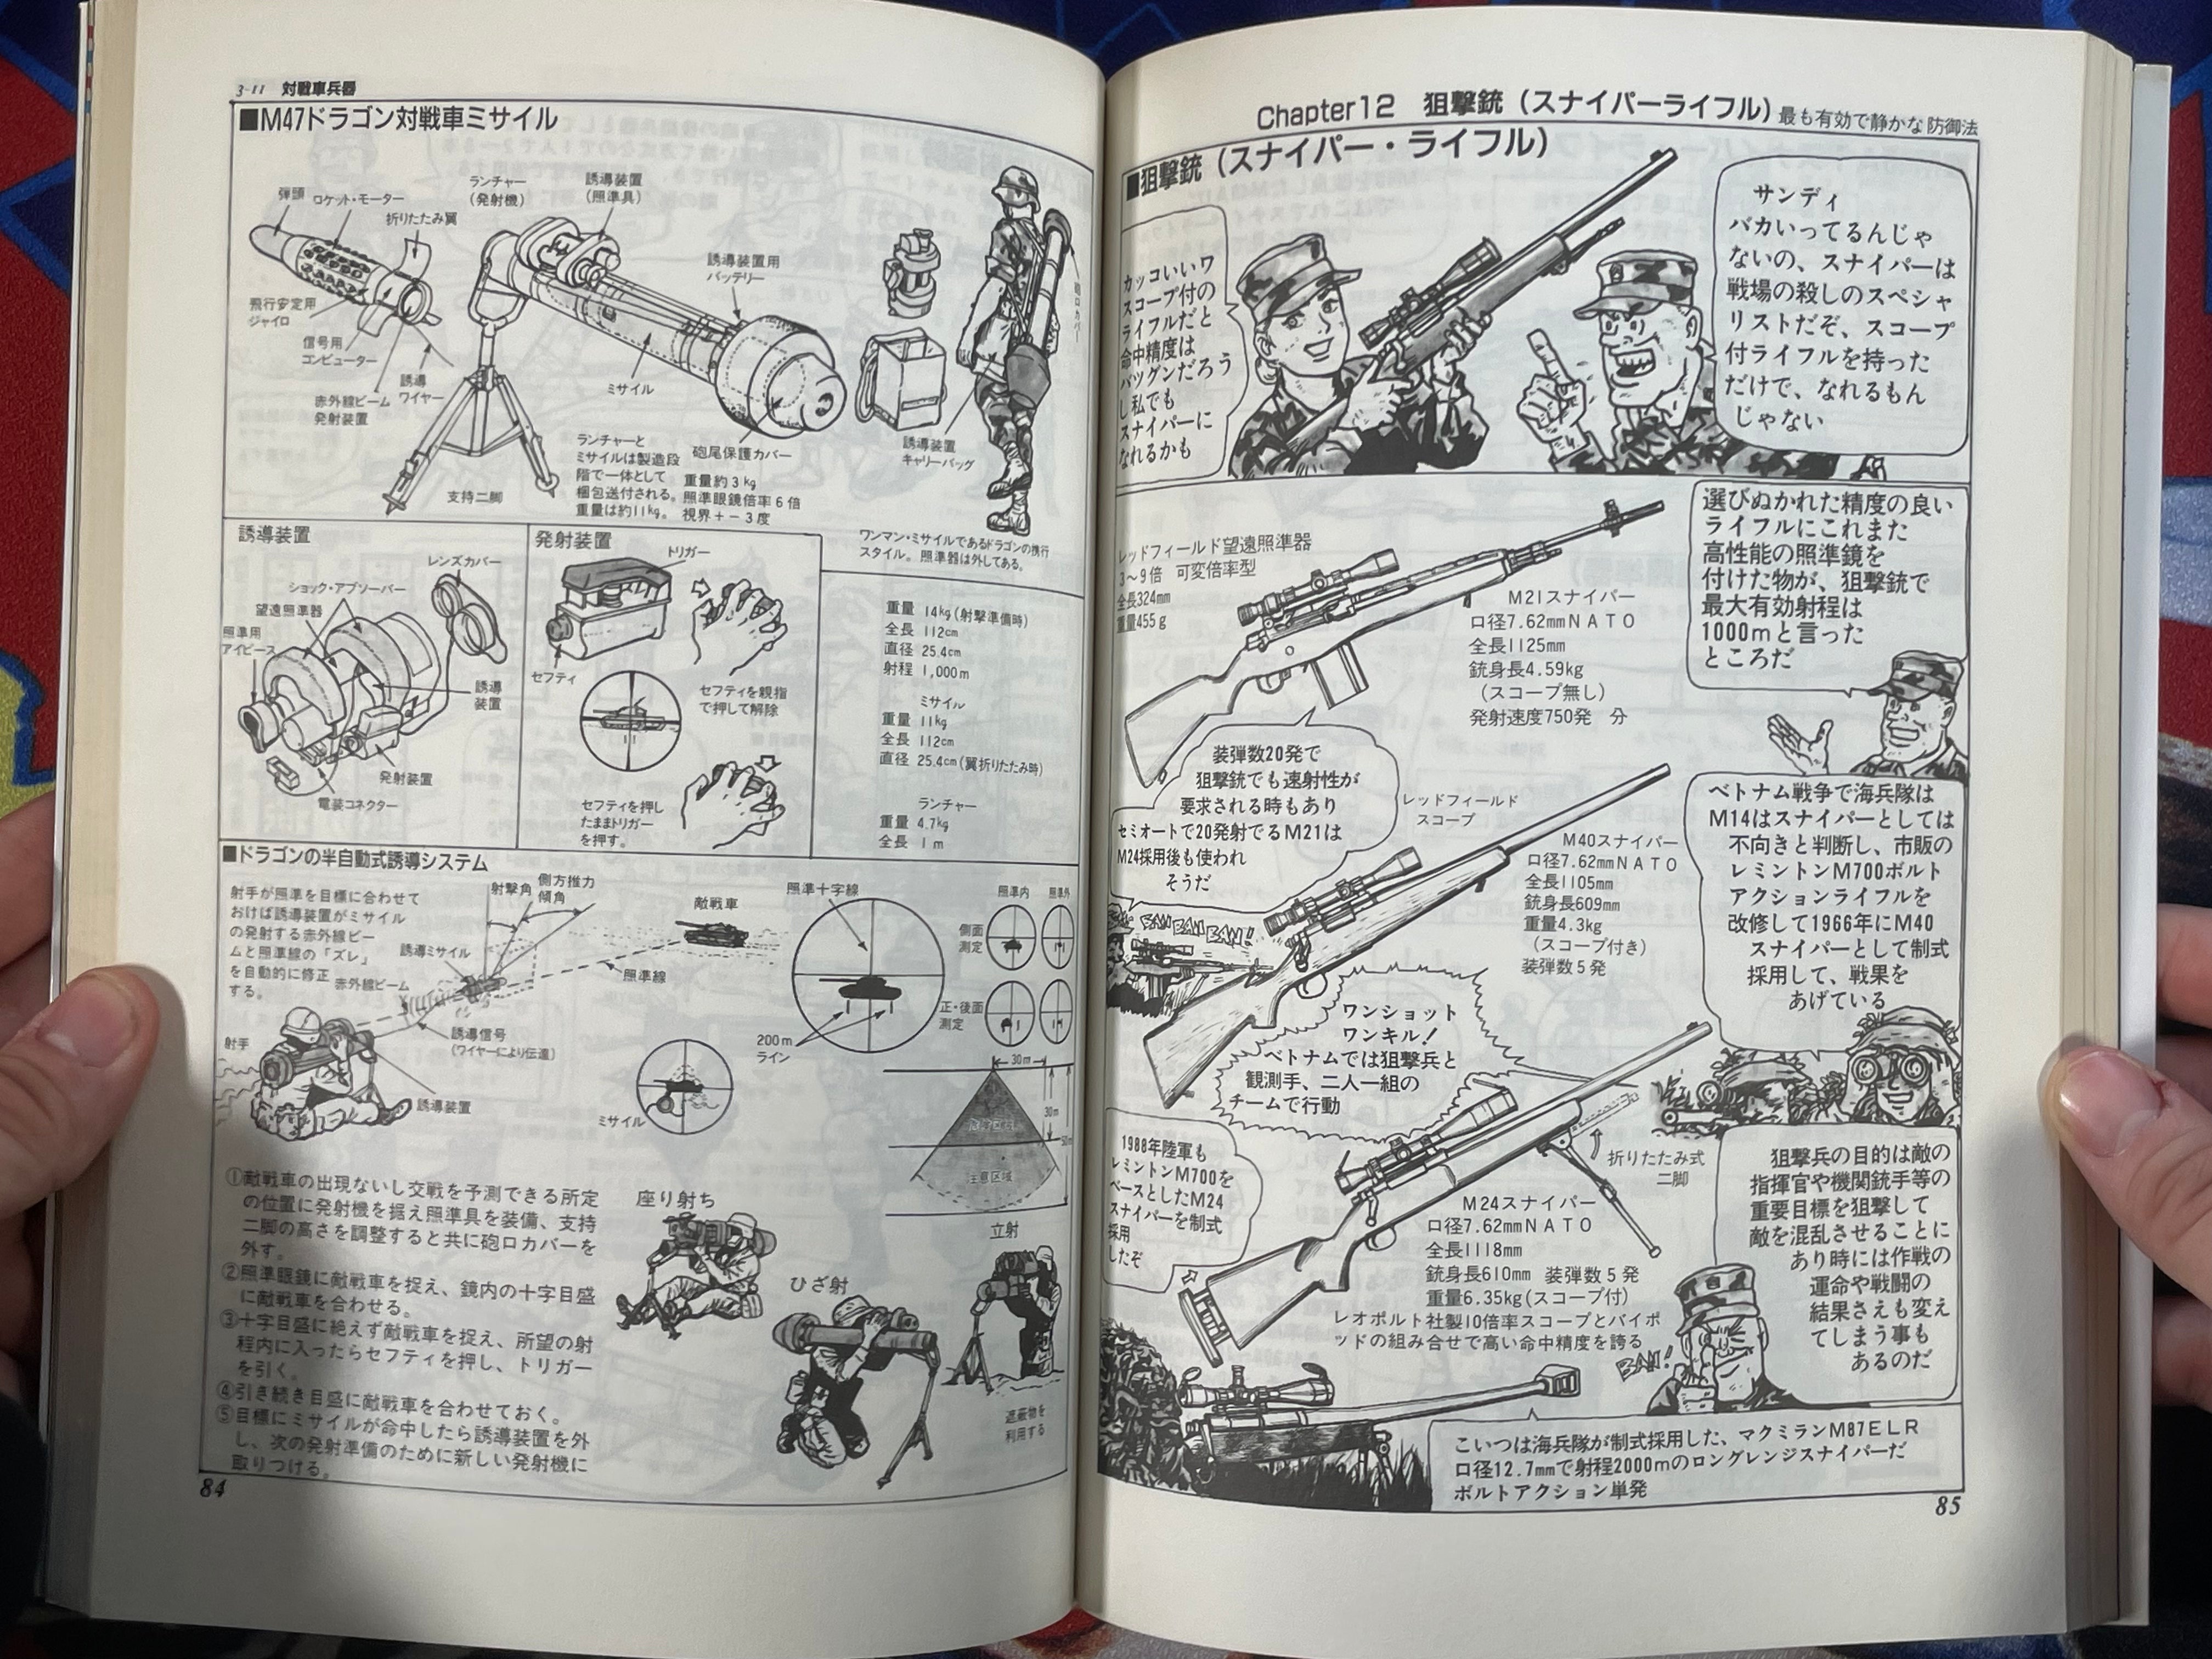 Combat Bible by Shin Ueda (1993)